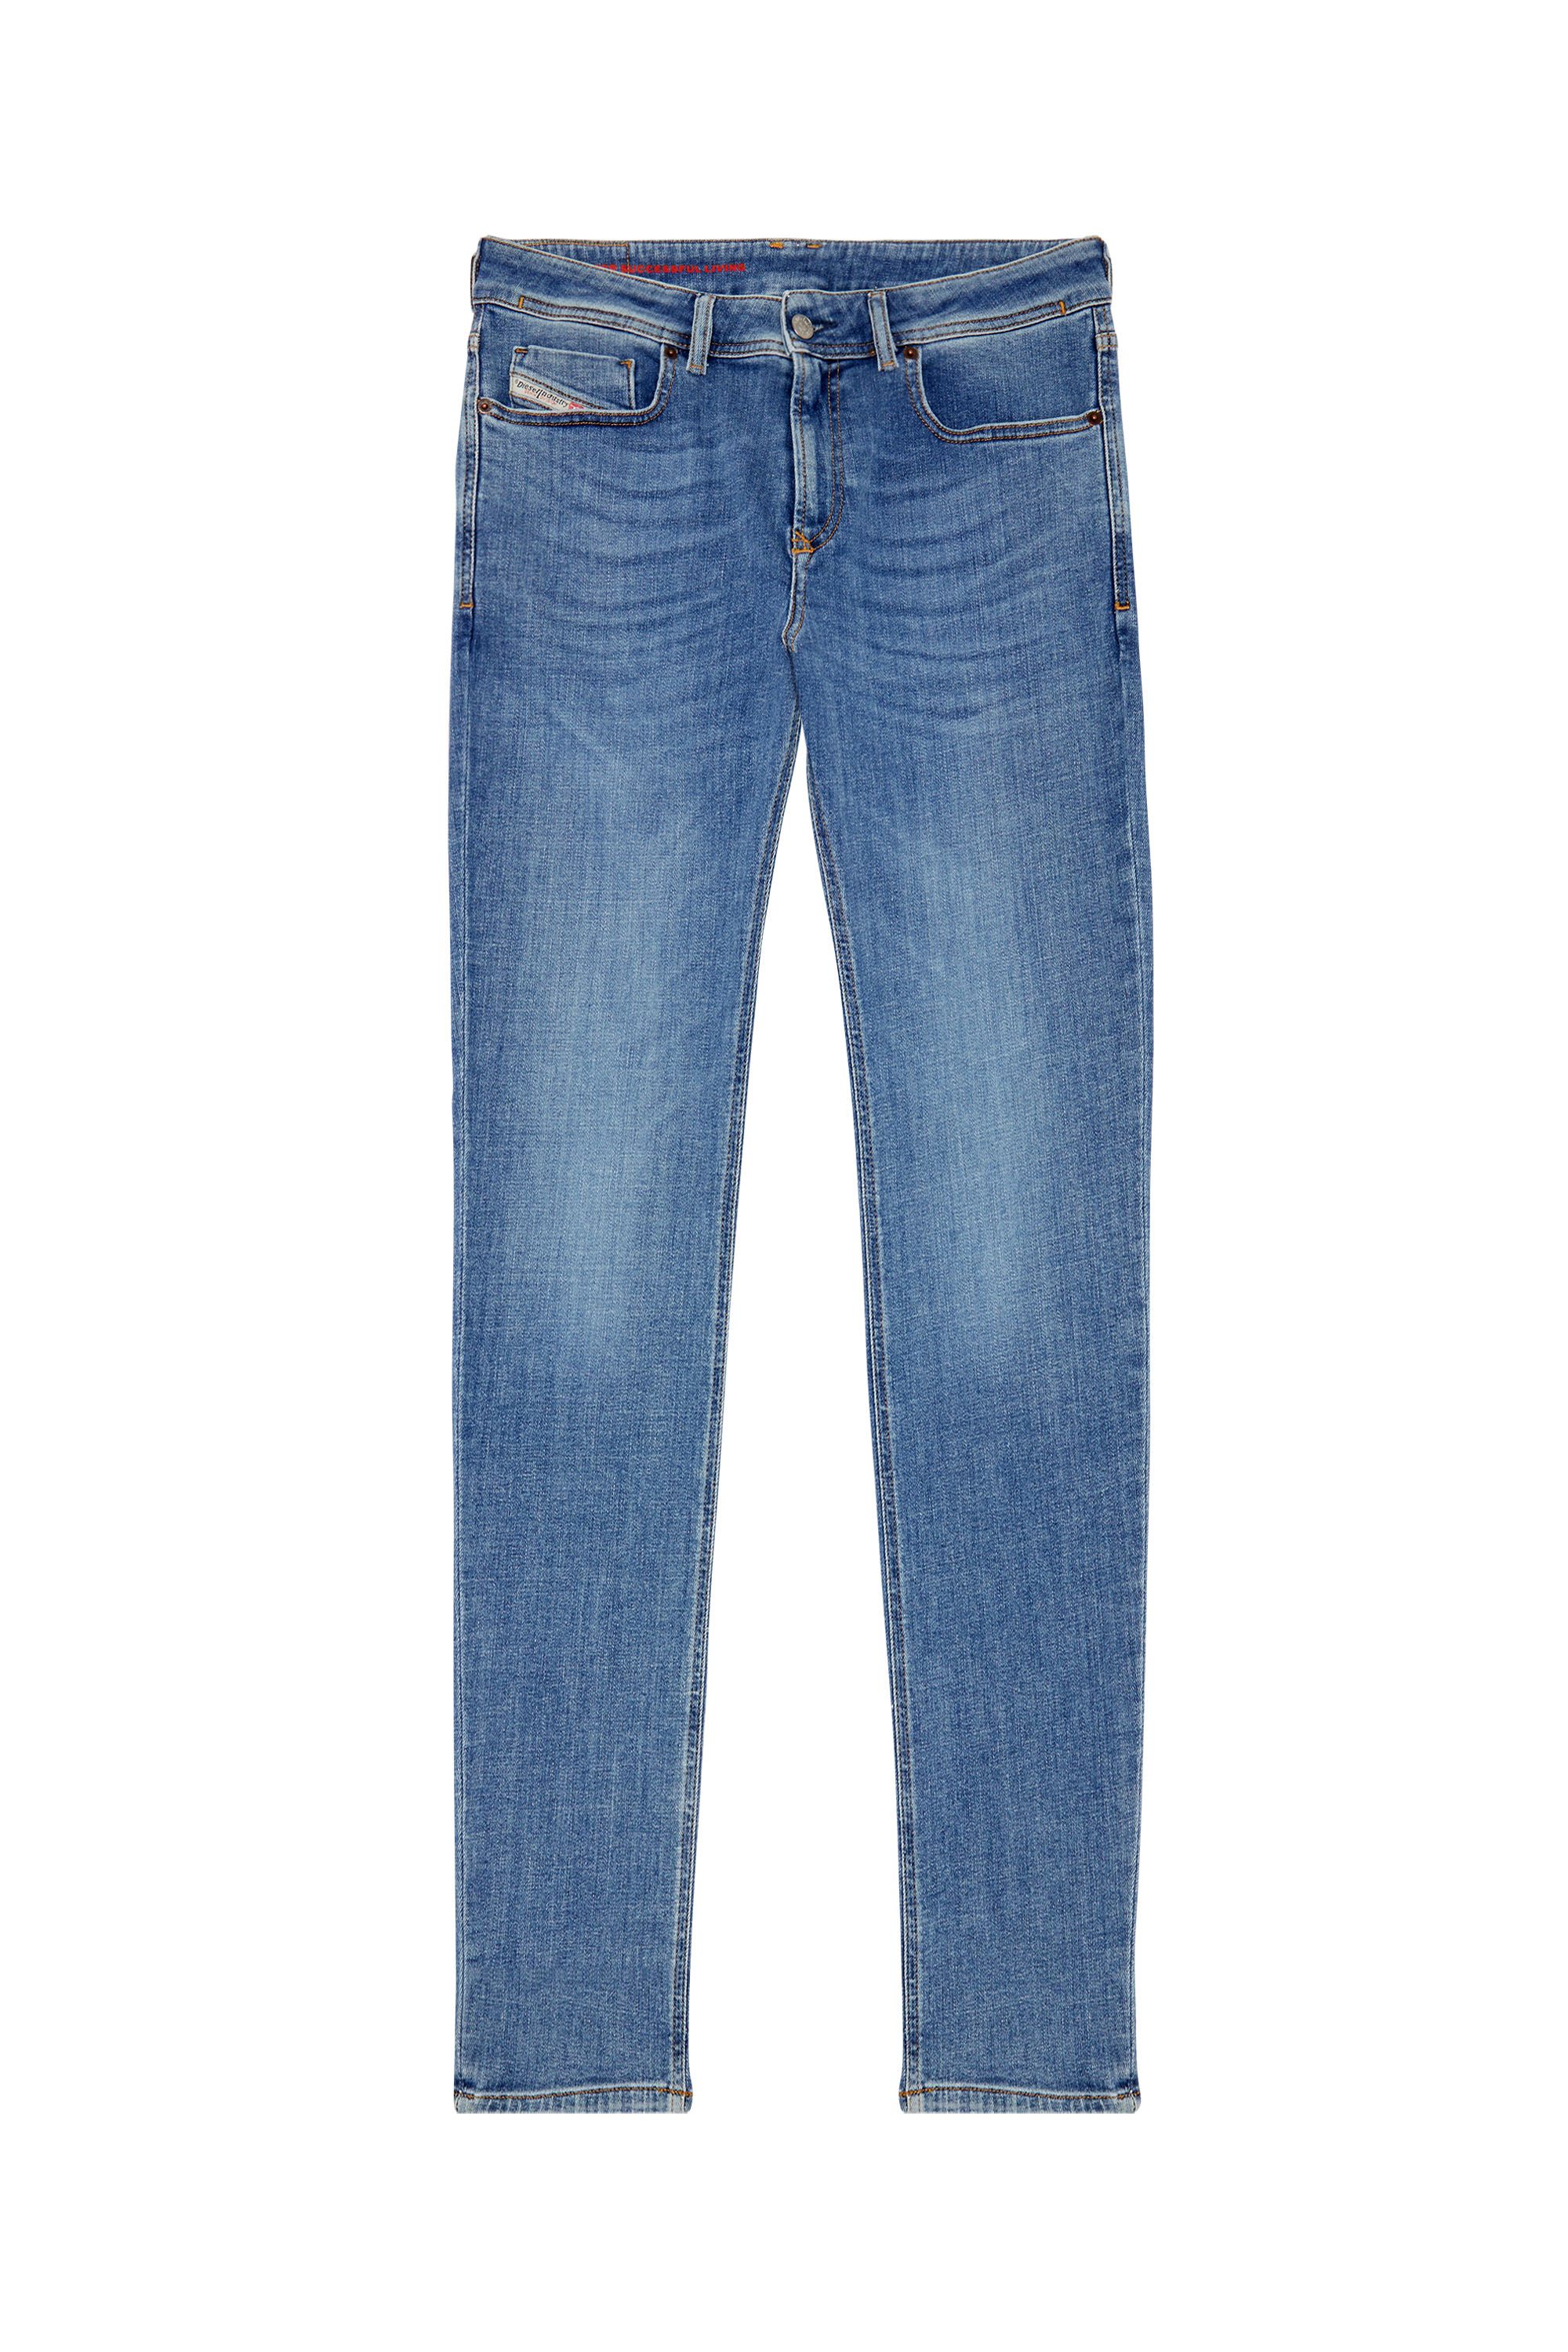 1979 SLEENKER 09C01 Skinny Jeans, Medium blue - Jeans